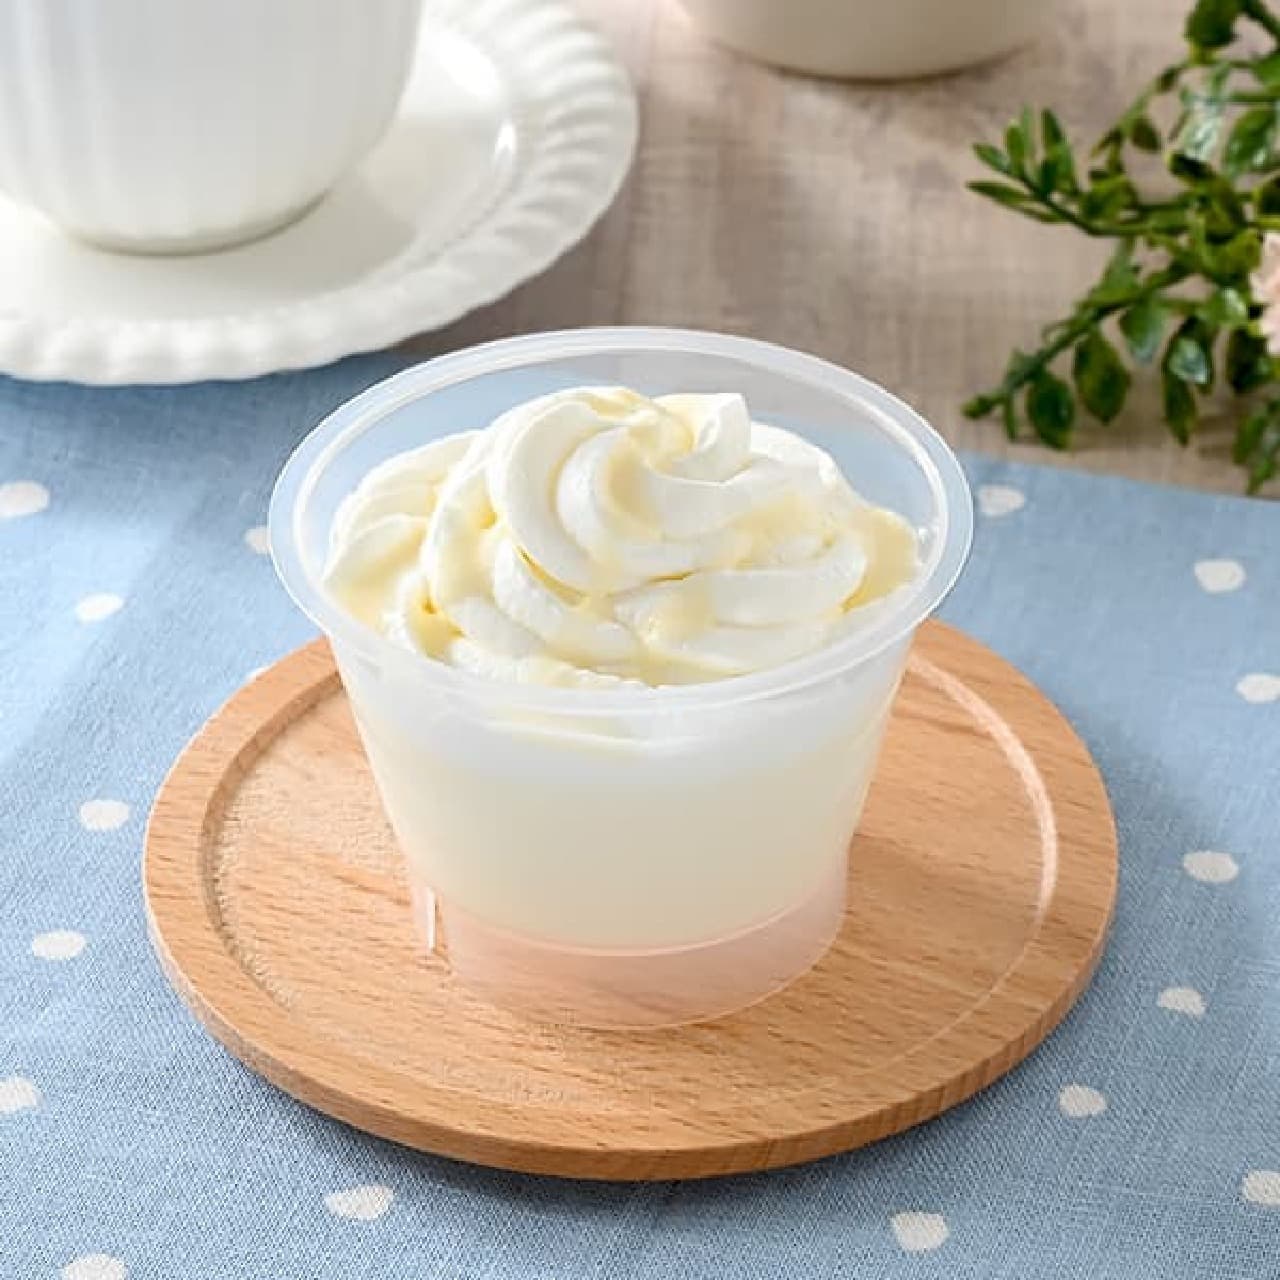 FamilyMart "Milk pudding of Hokkaido milk